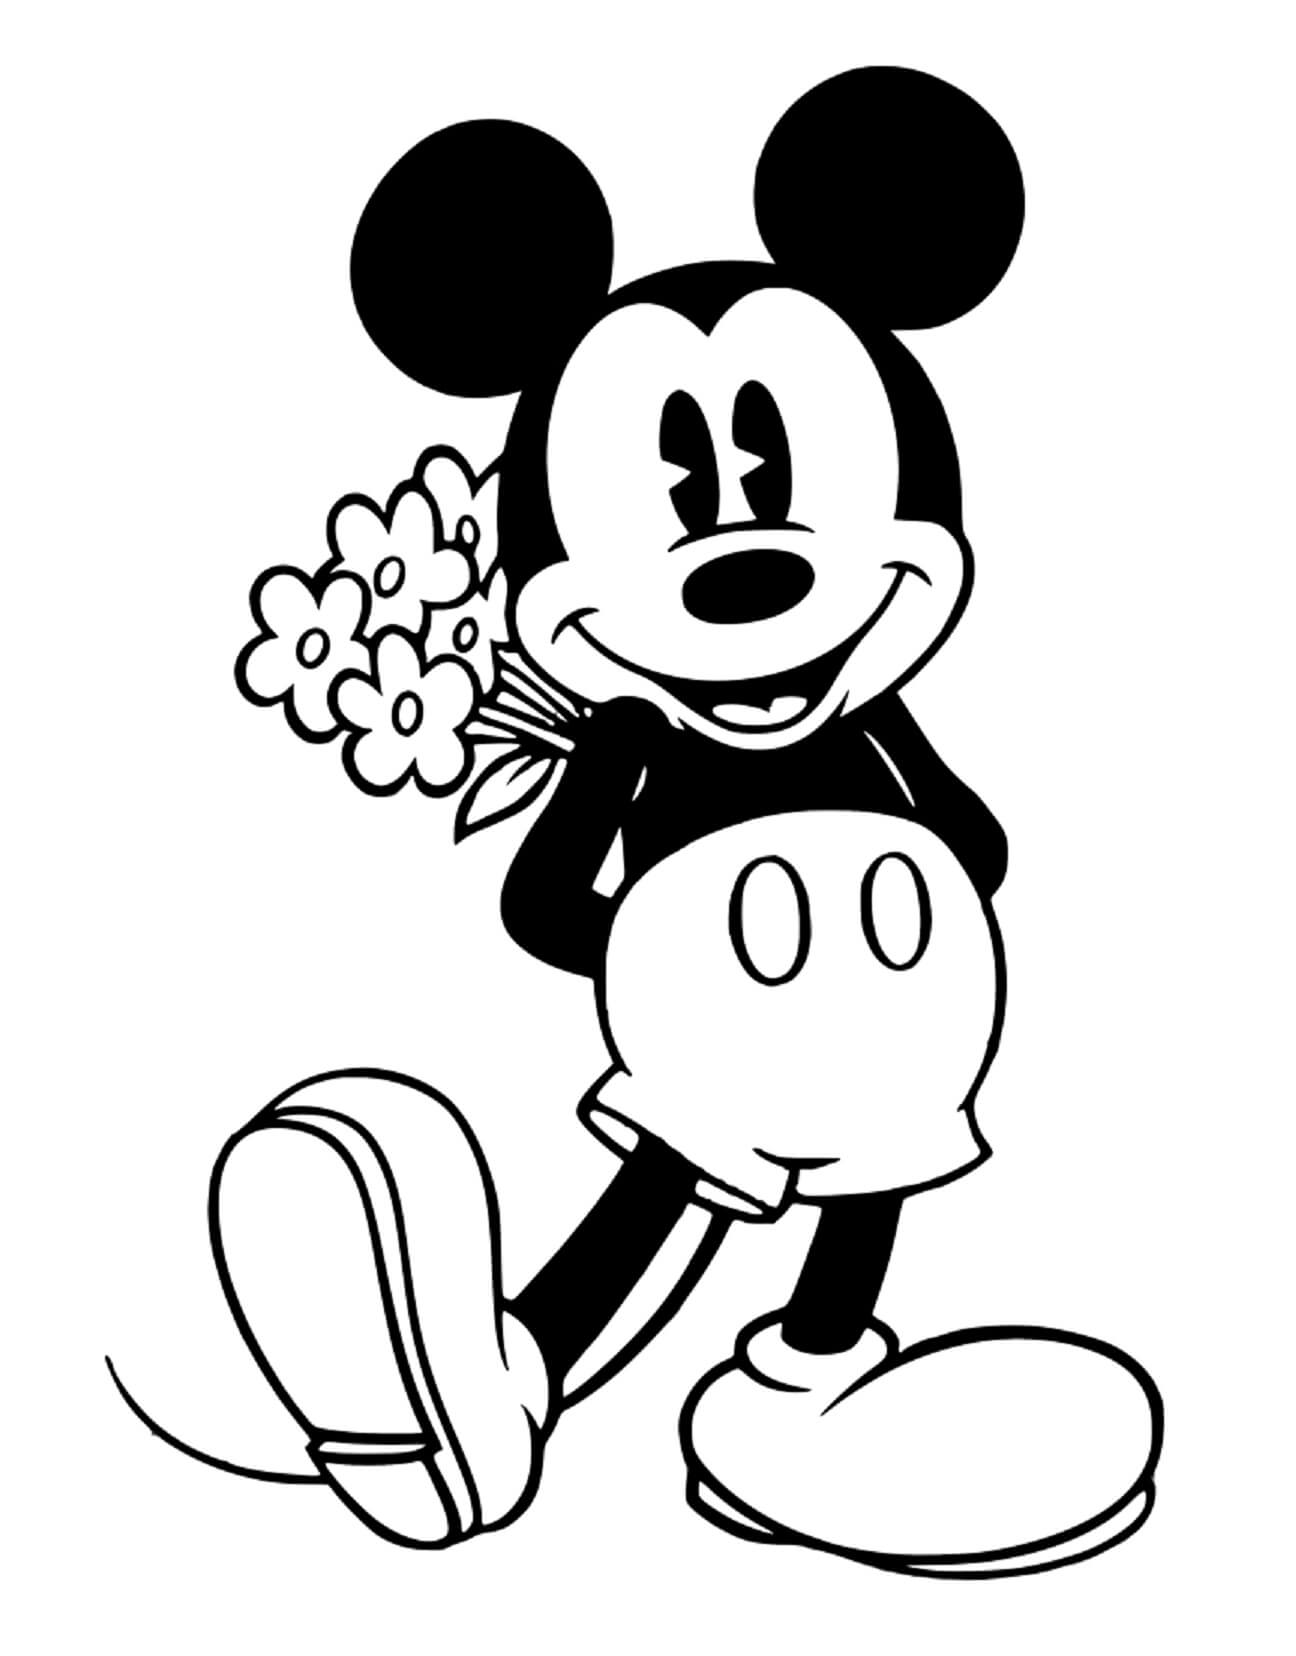 Mickey die gelukkig een boeketbloem vasthoudt